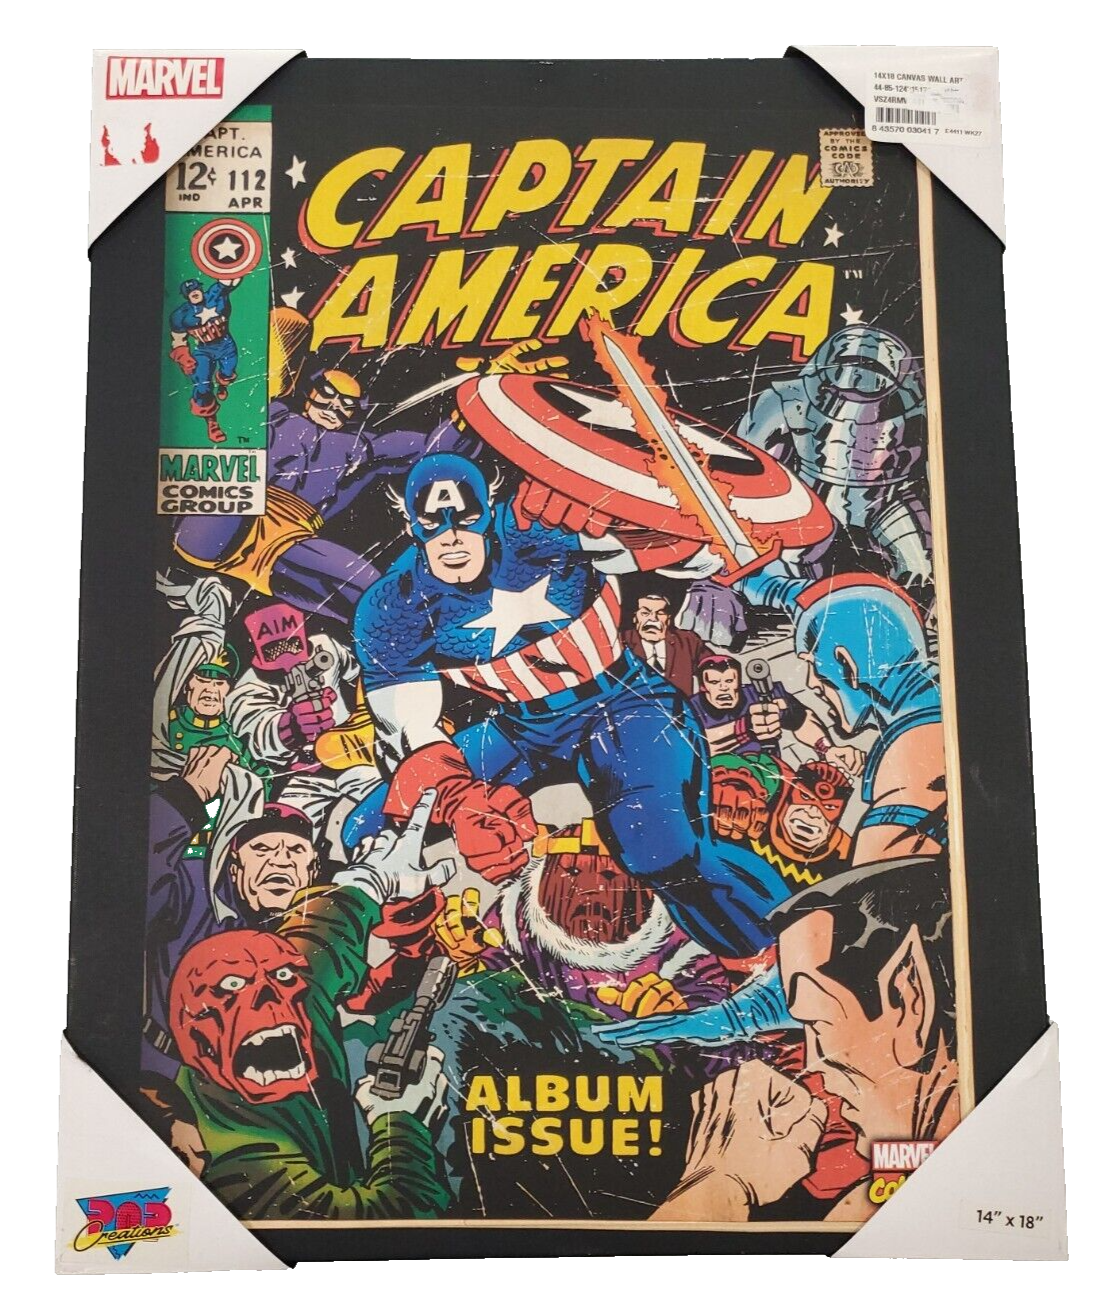 Primary image for Captain America #112 14x18 Framed Cover Poster Marvel